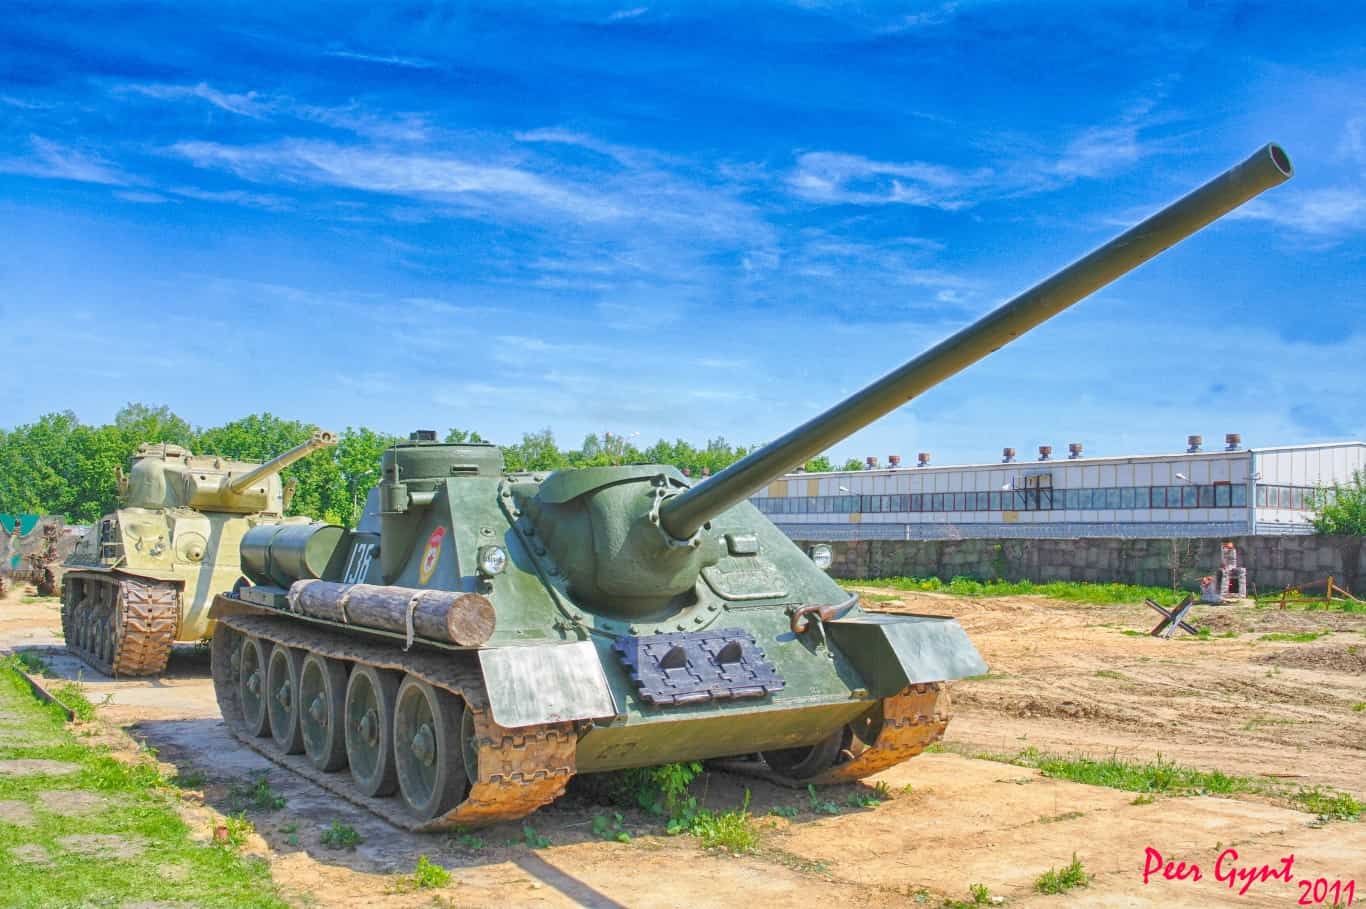 Hungary+artillery | Dedication to the Great Victory Day. Soviet Self Propelled Tank Destroer SU-100. 1944-45. ÃÂÃÂ¾ ÃÂ´ÃÂ½ÃÂ ÃÂÃÂµÃÂ»ÃÂ¸ÃÂºÃÂ¾ÃÂ¹ ÃÂÃÂ¾ÃÂ±ÃÂµÃÂ´ÃÂ. ÃÂ¡ÃÂ¾ÃÂ²ÃÂµÃÂÃÂÃÂºÃÂ°ÃÂ ÃÂ¡ÃÂ°ÃÂ¼ÃÂ¾ÃÂÃÂ¾ÃÂ´ÃÂºÃÂ° ÃÂ¡ÃÂ£-100.